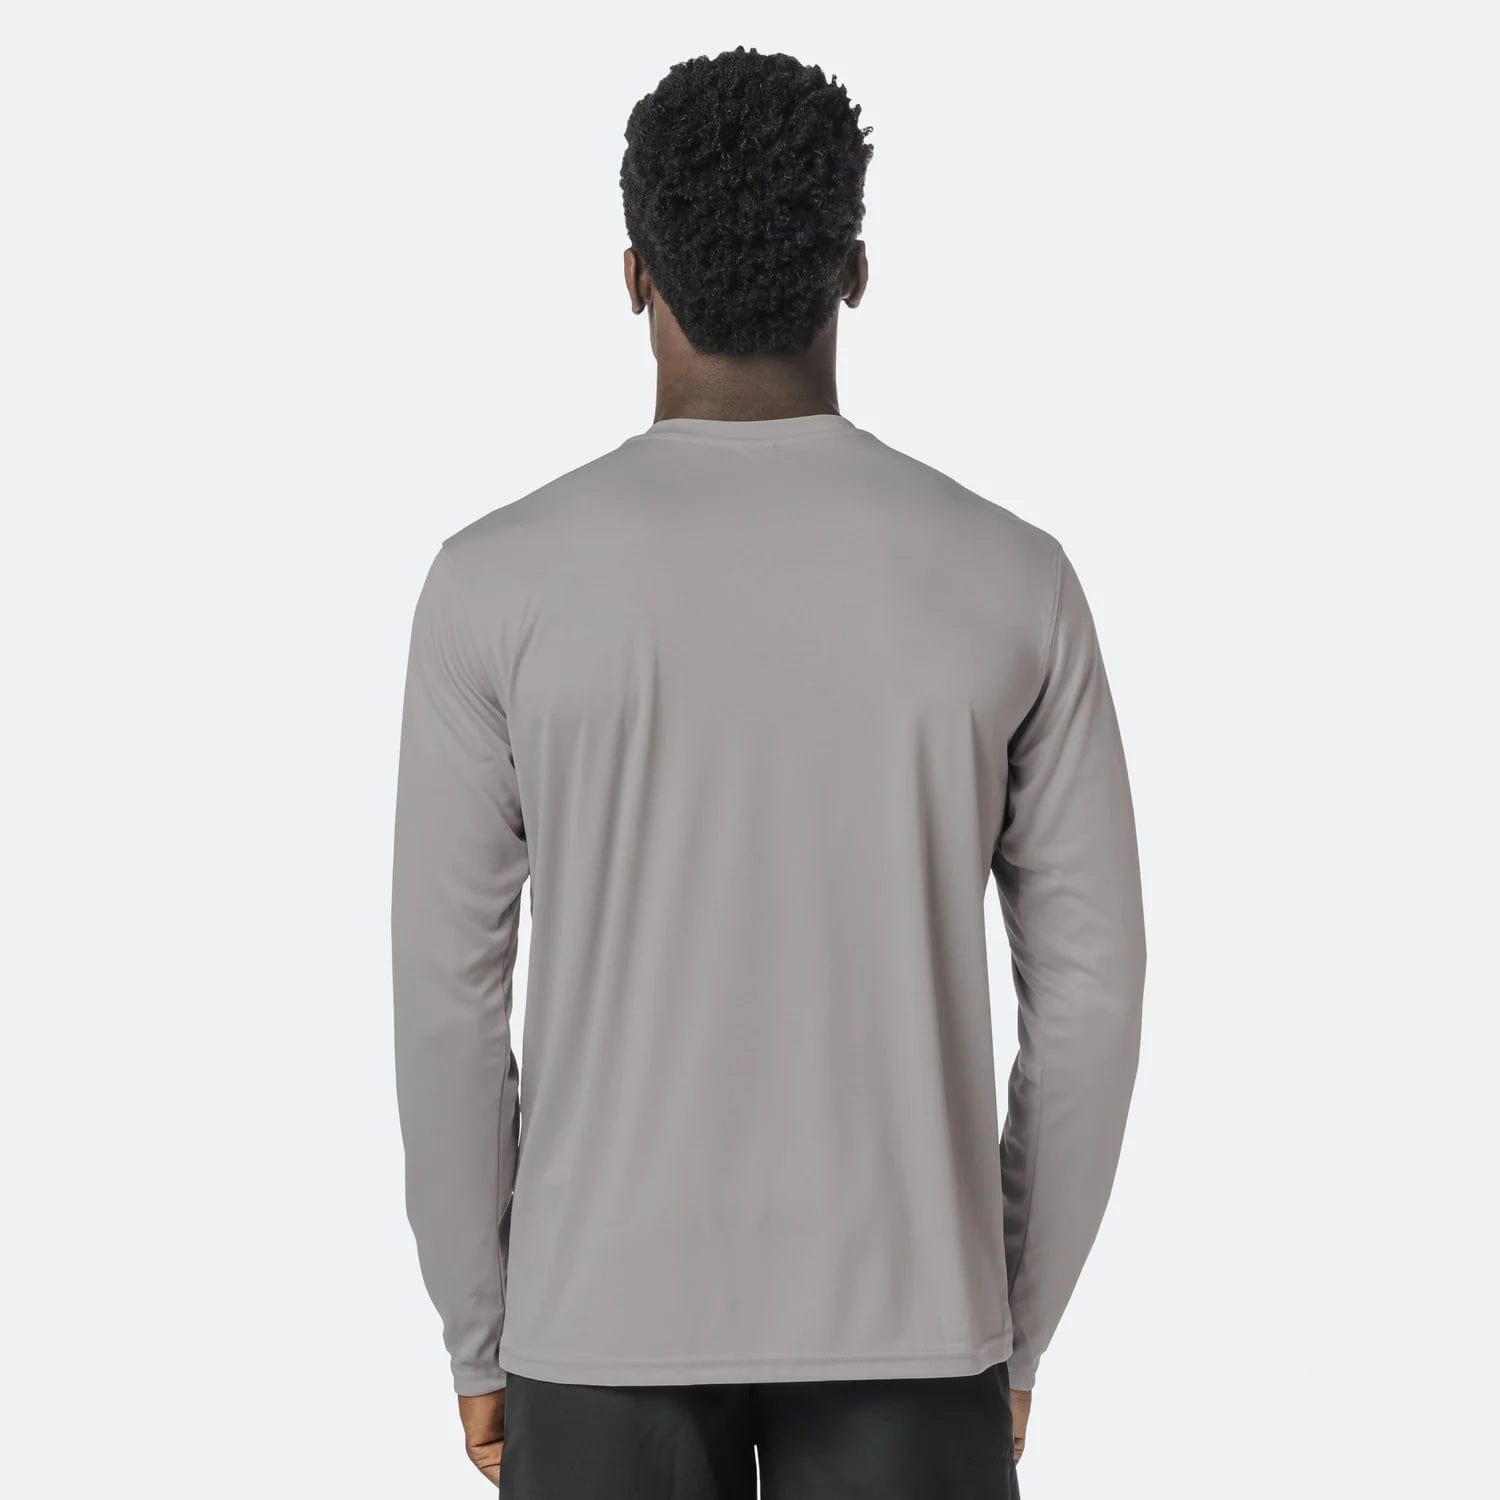 Vapor Apparel Men's UPF 50+ Sun Protection Solar Long Sleeve Shirt, White, x Large